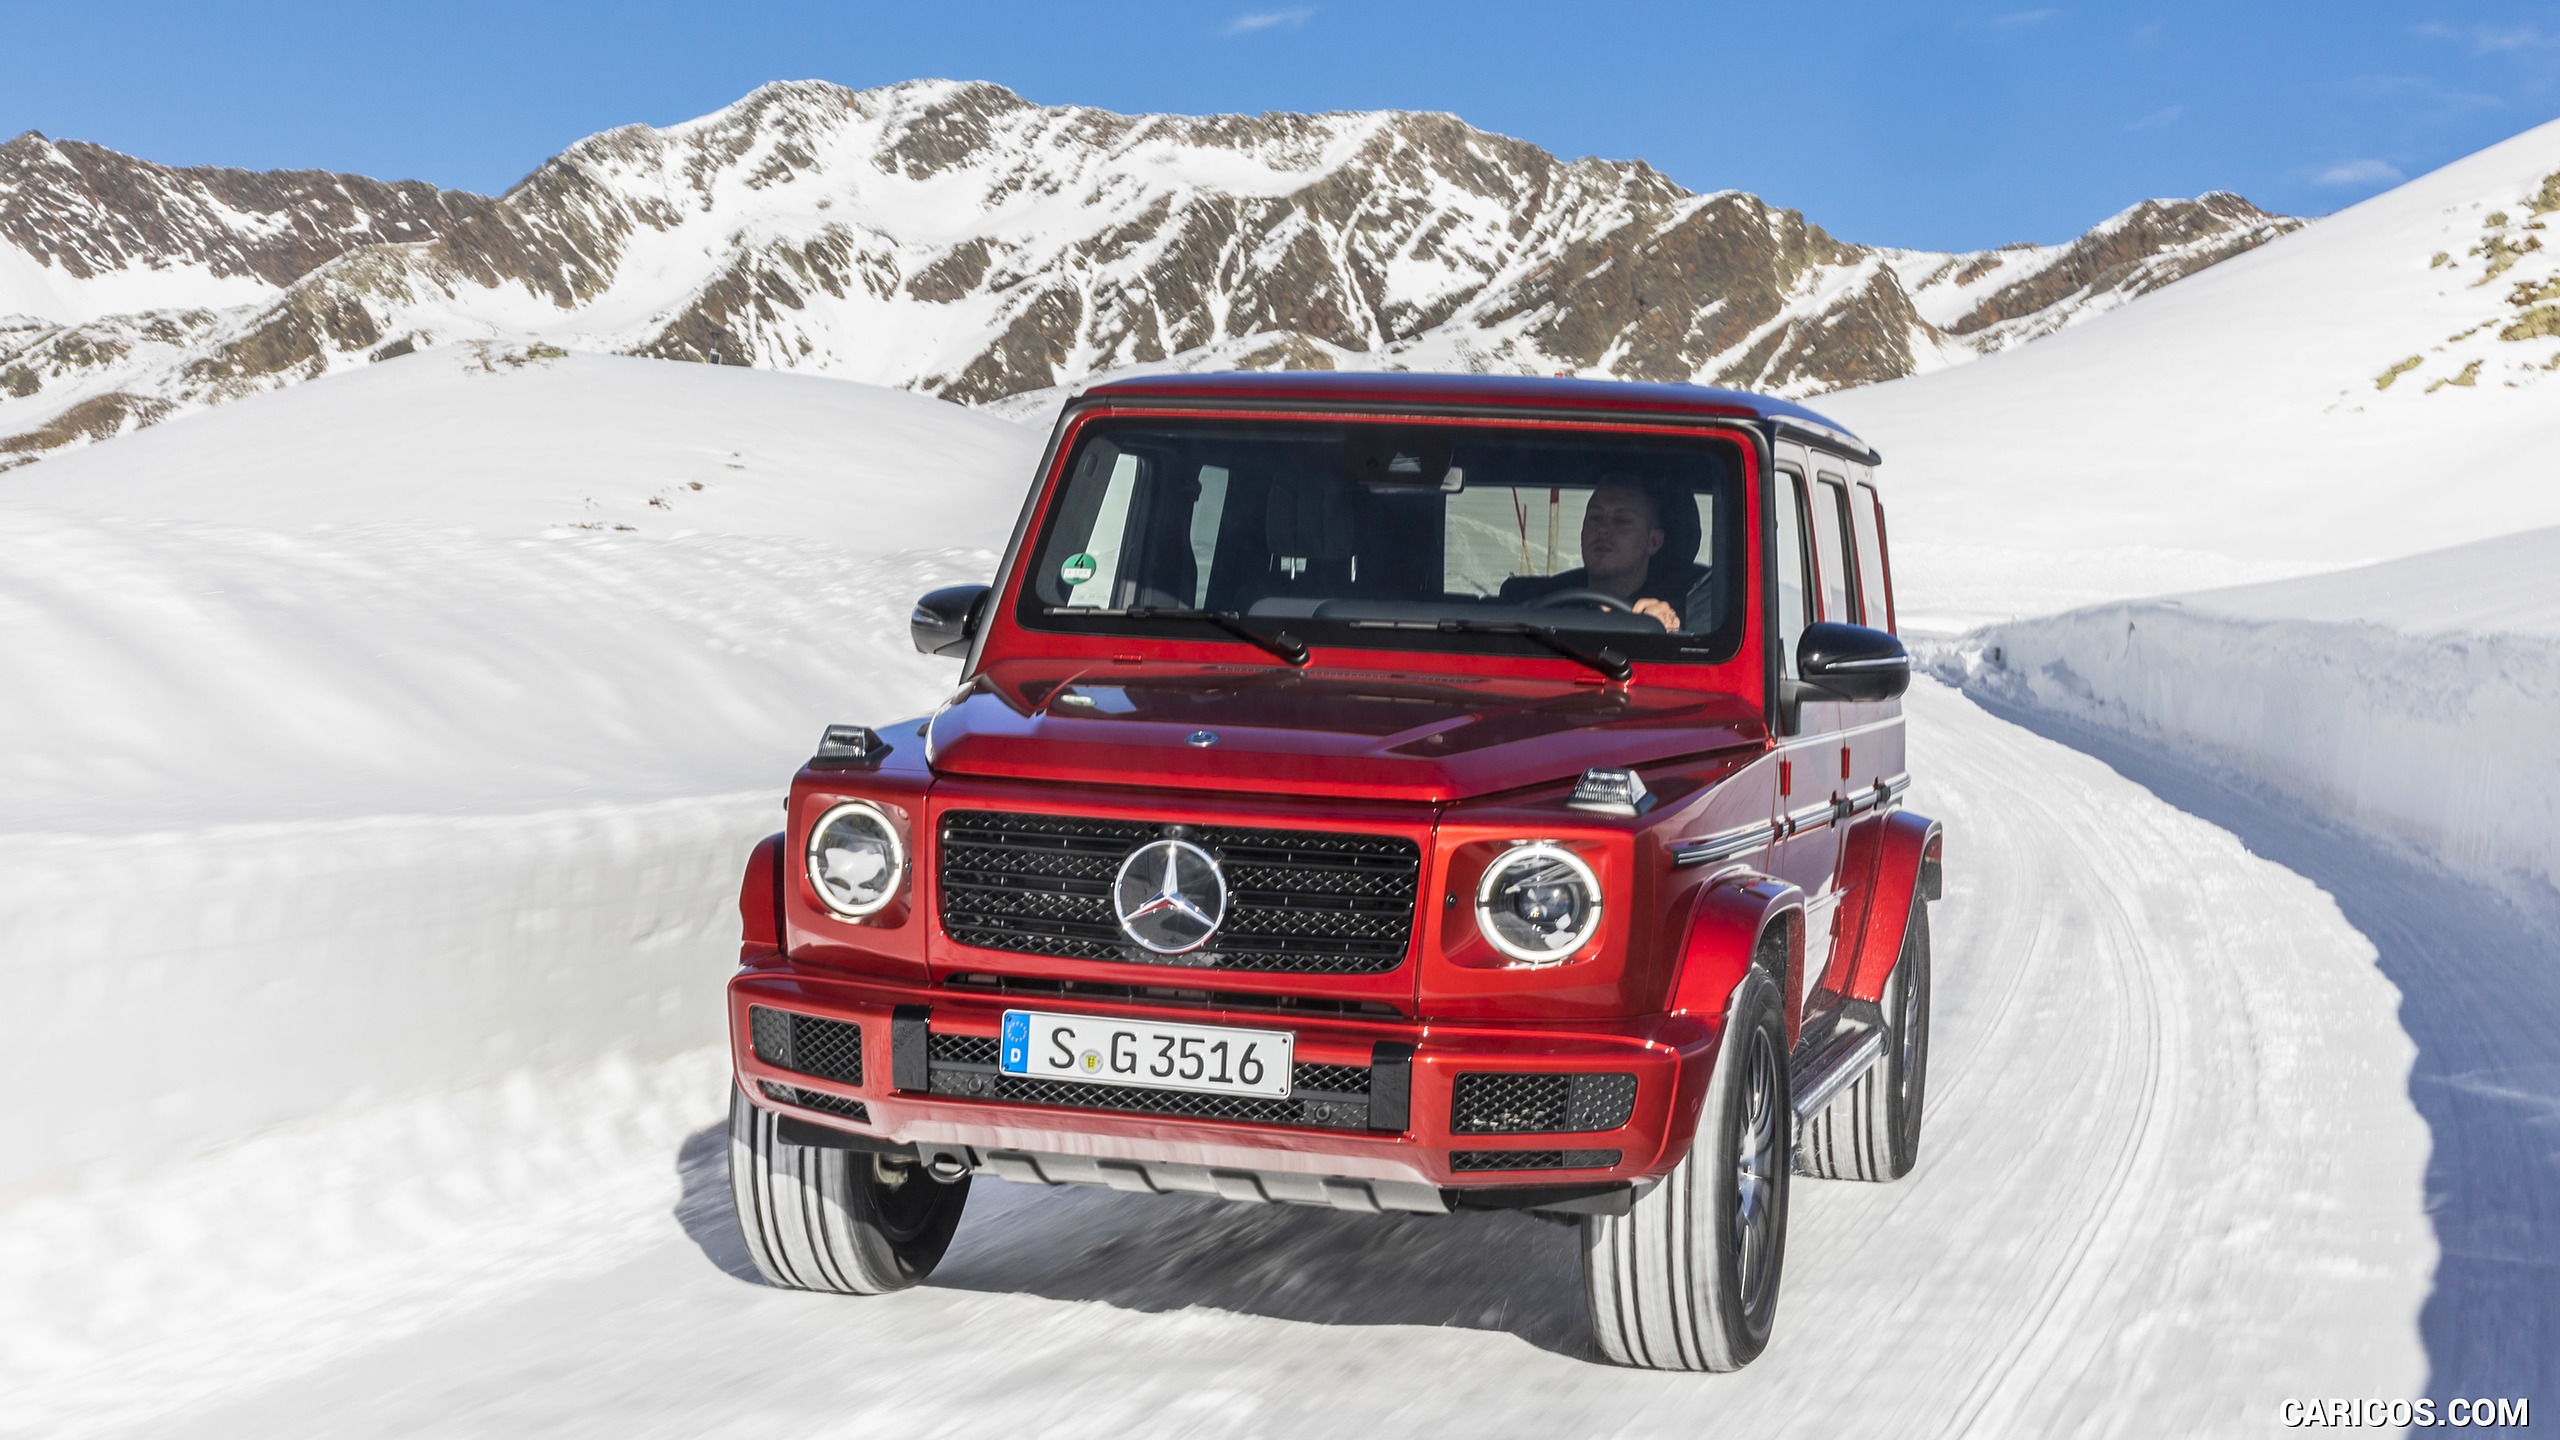 2019 Mercedes-Benz G 350 d (Designo Hyazinth Red Metallic) - In Snow - Front, #1 of 51